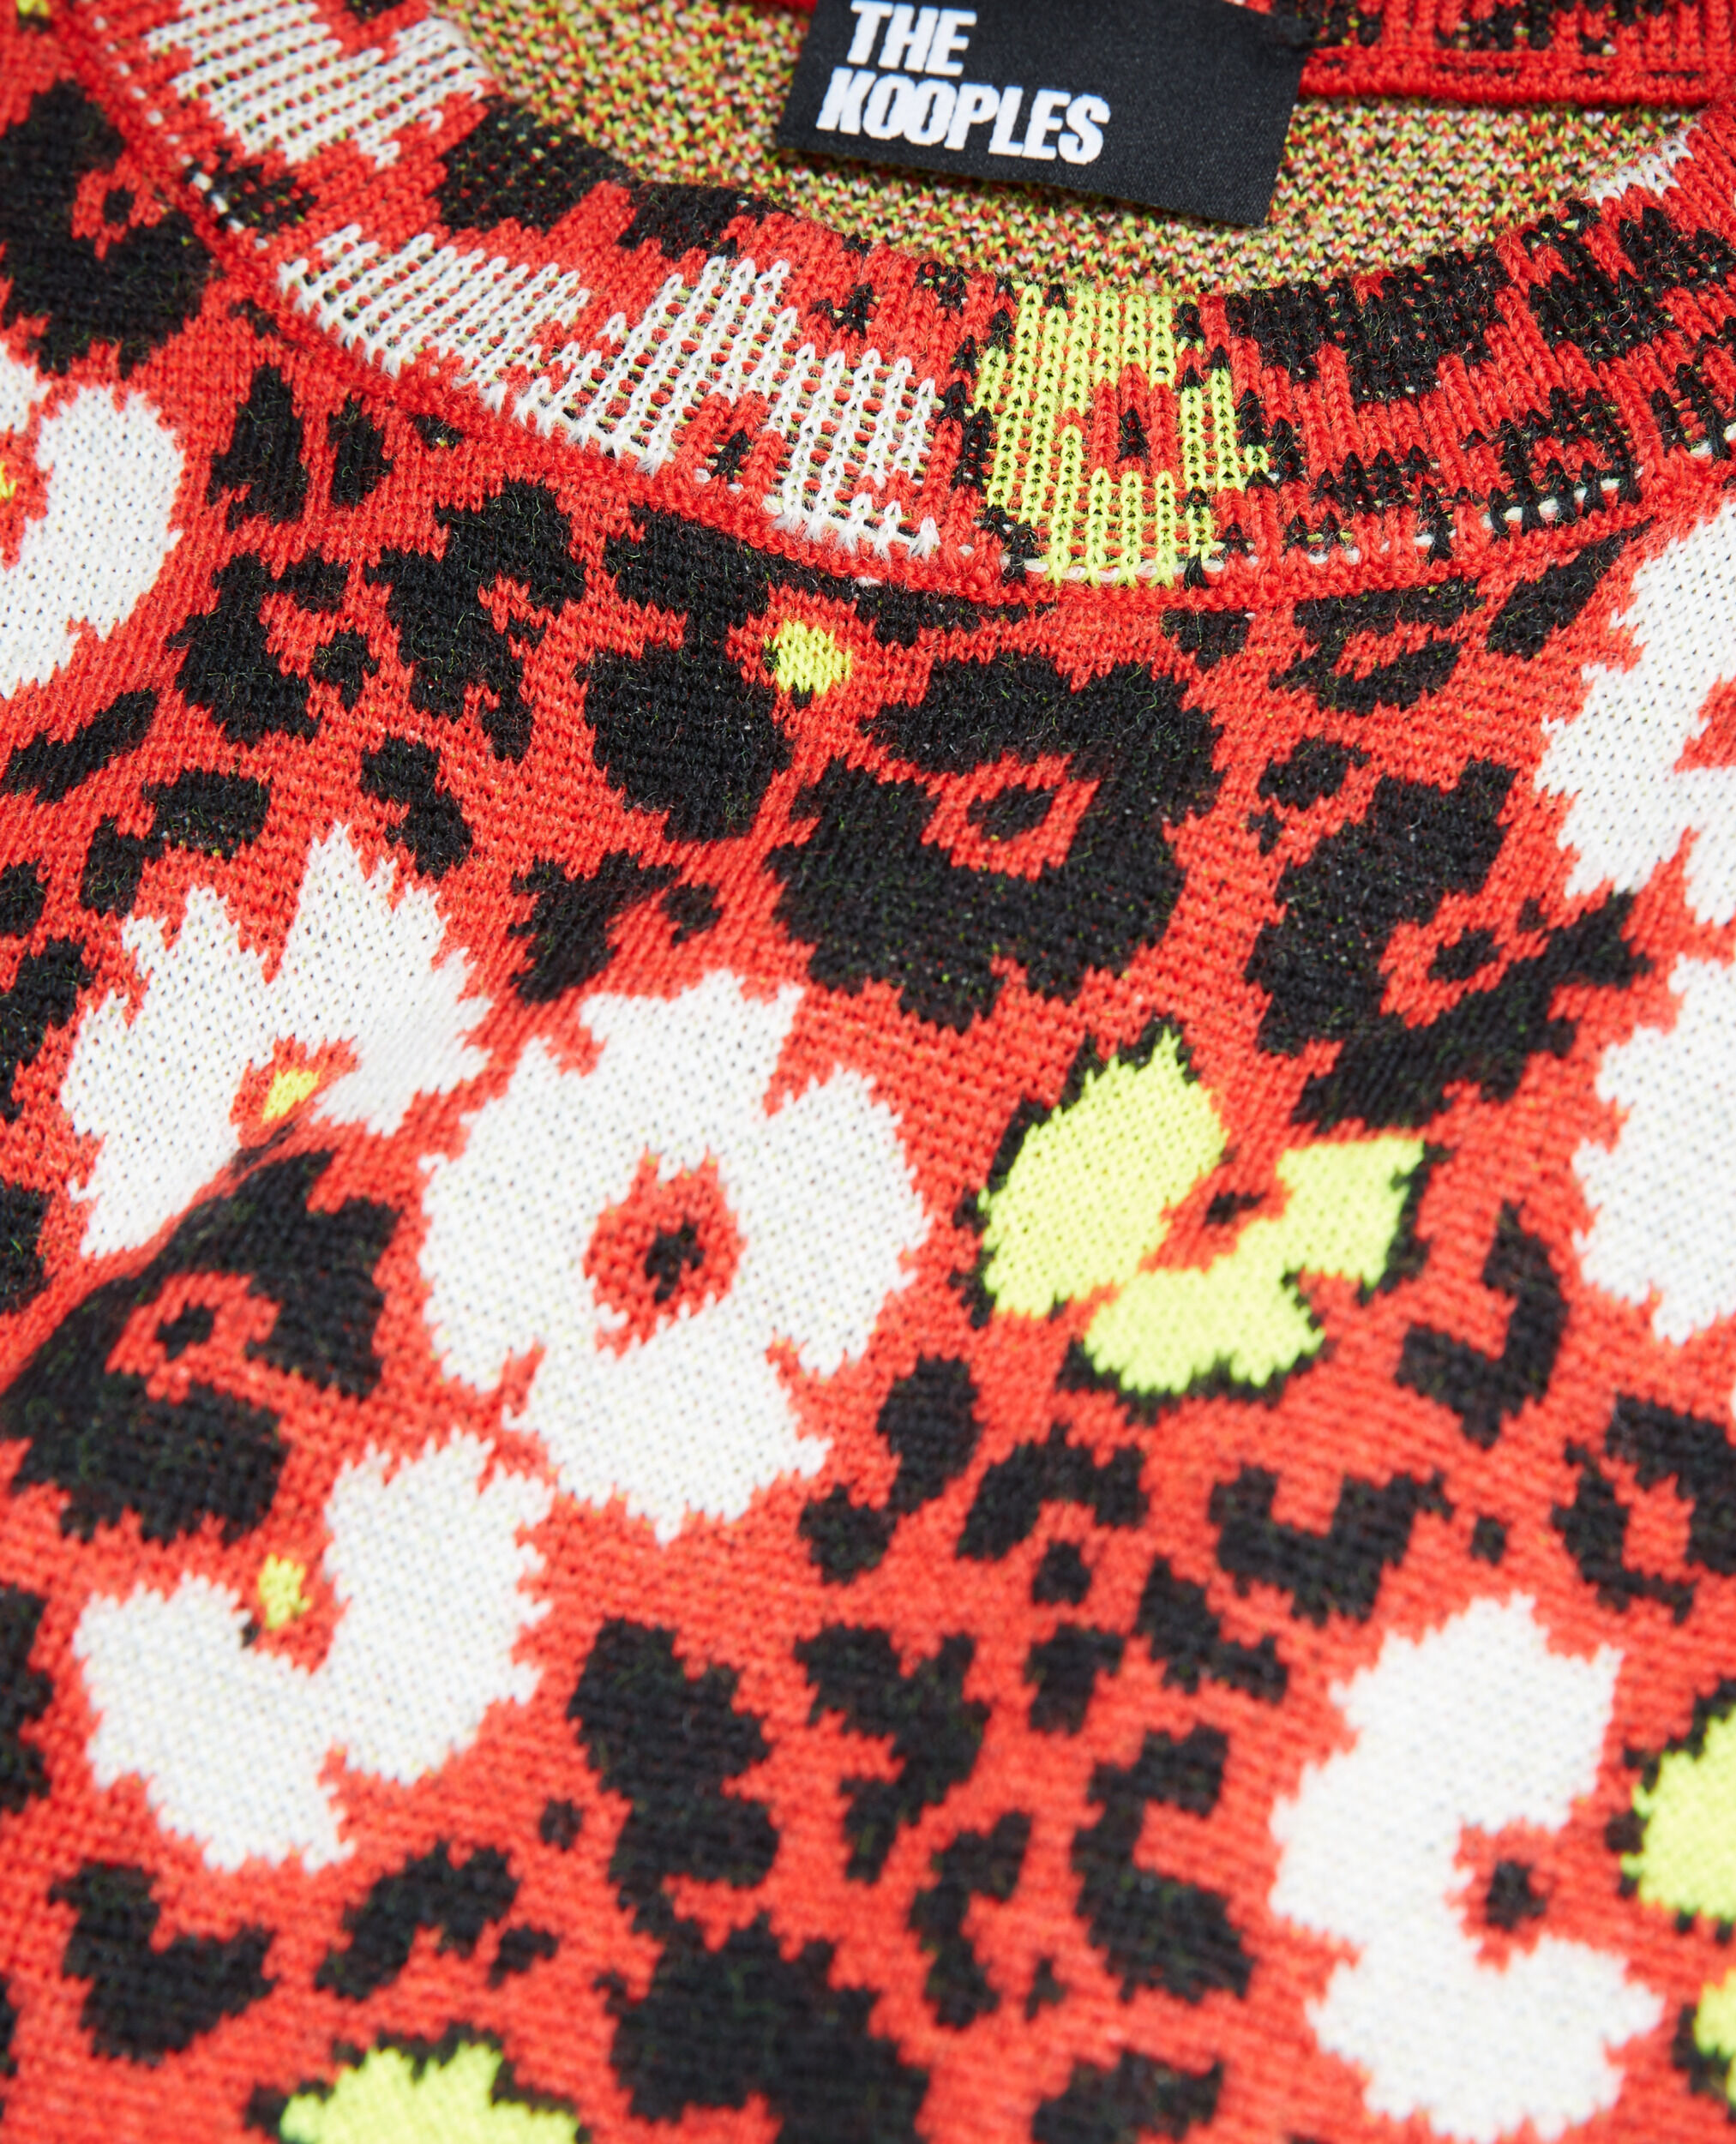 Robe longue en laine imprimé fleuri, DARK RED, hi-res image number null